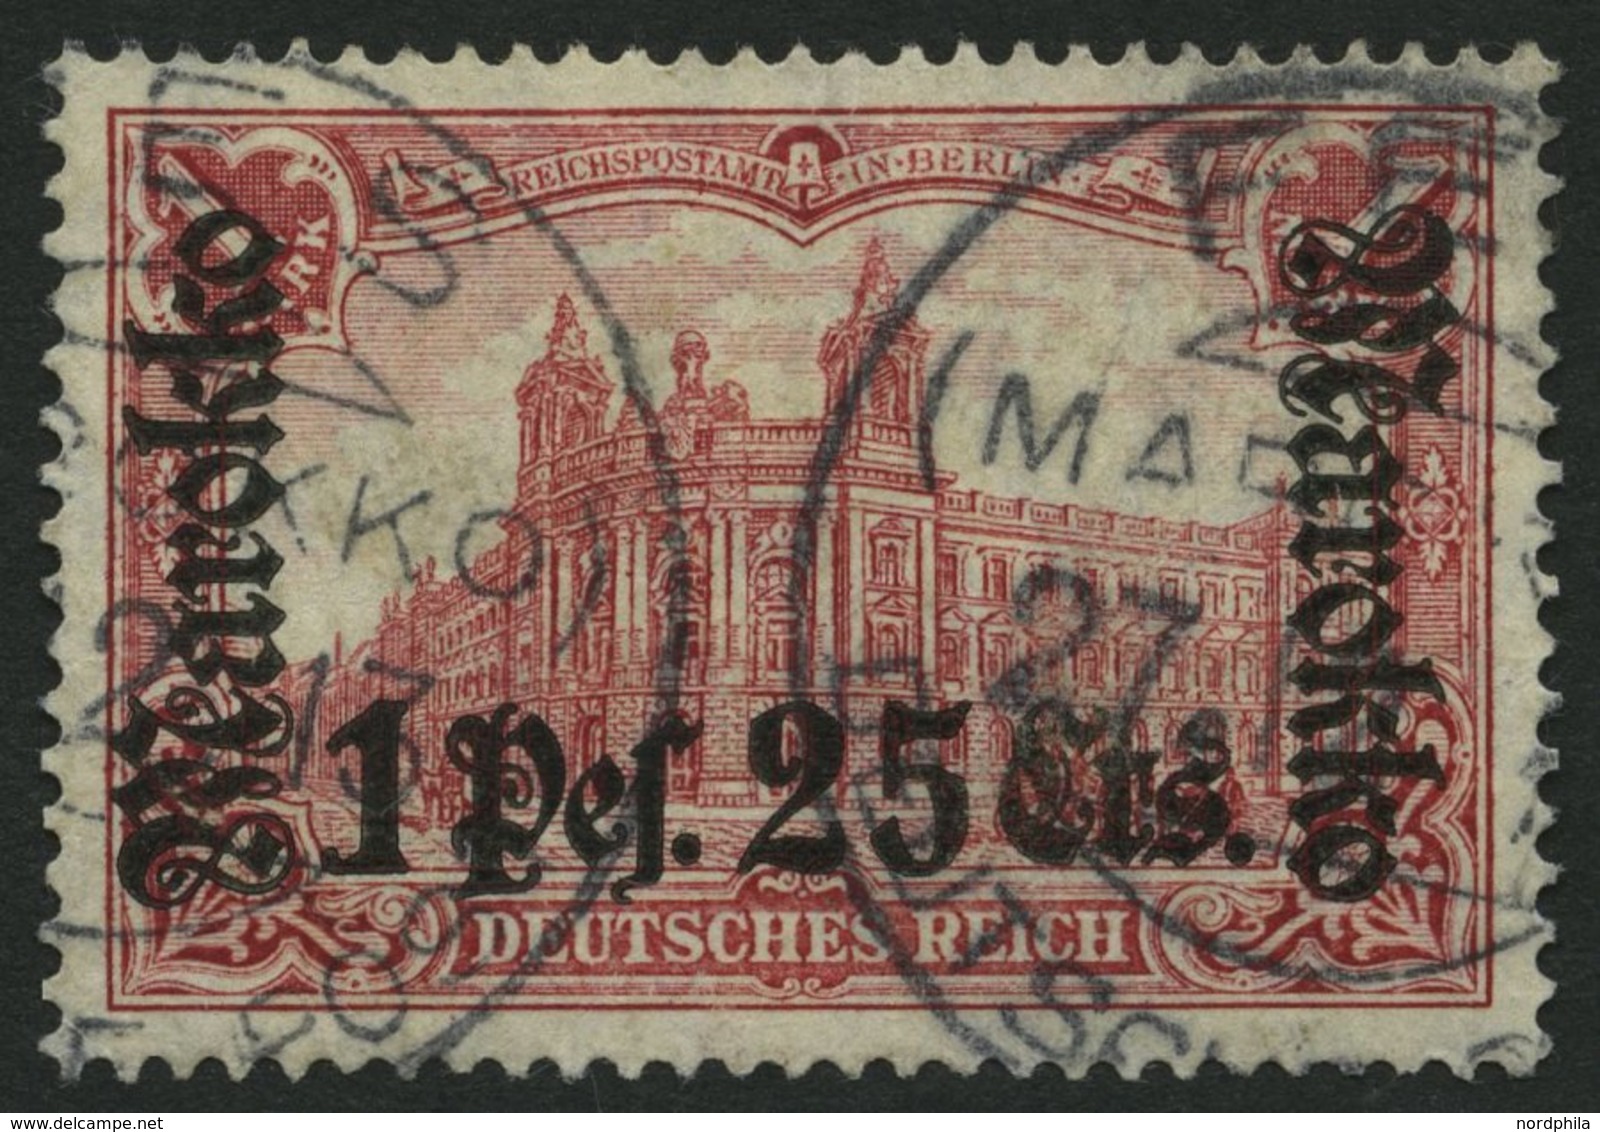 DP IN MAROKKO 55IA O, 1911, 1 P. 25 C. Auf 1 M., Friedensdruck, Stempel FES, Pracht, Gepr. Steuer, Mi. 80.- - Marocco (uffici)